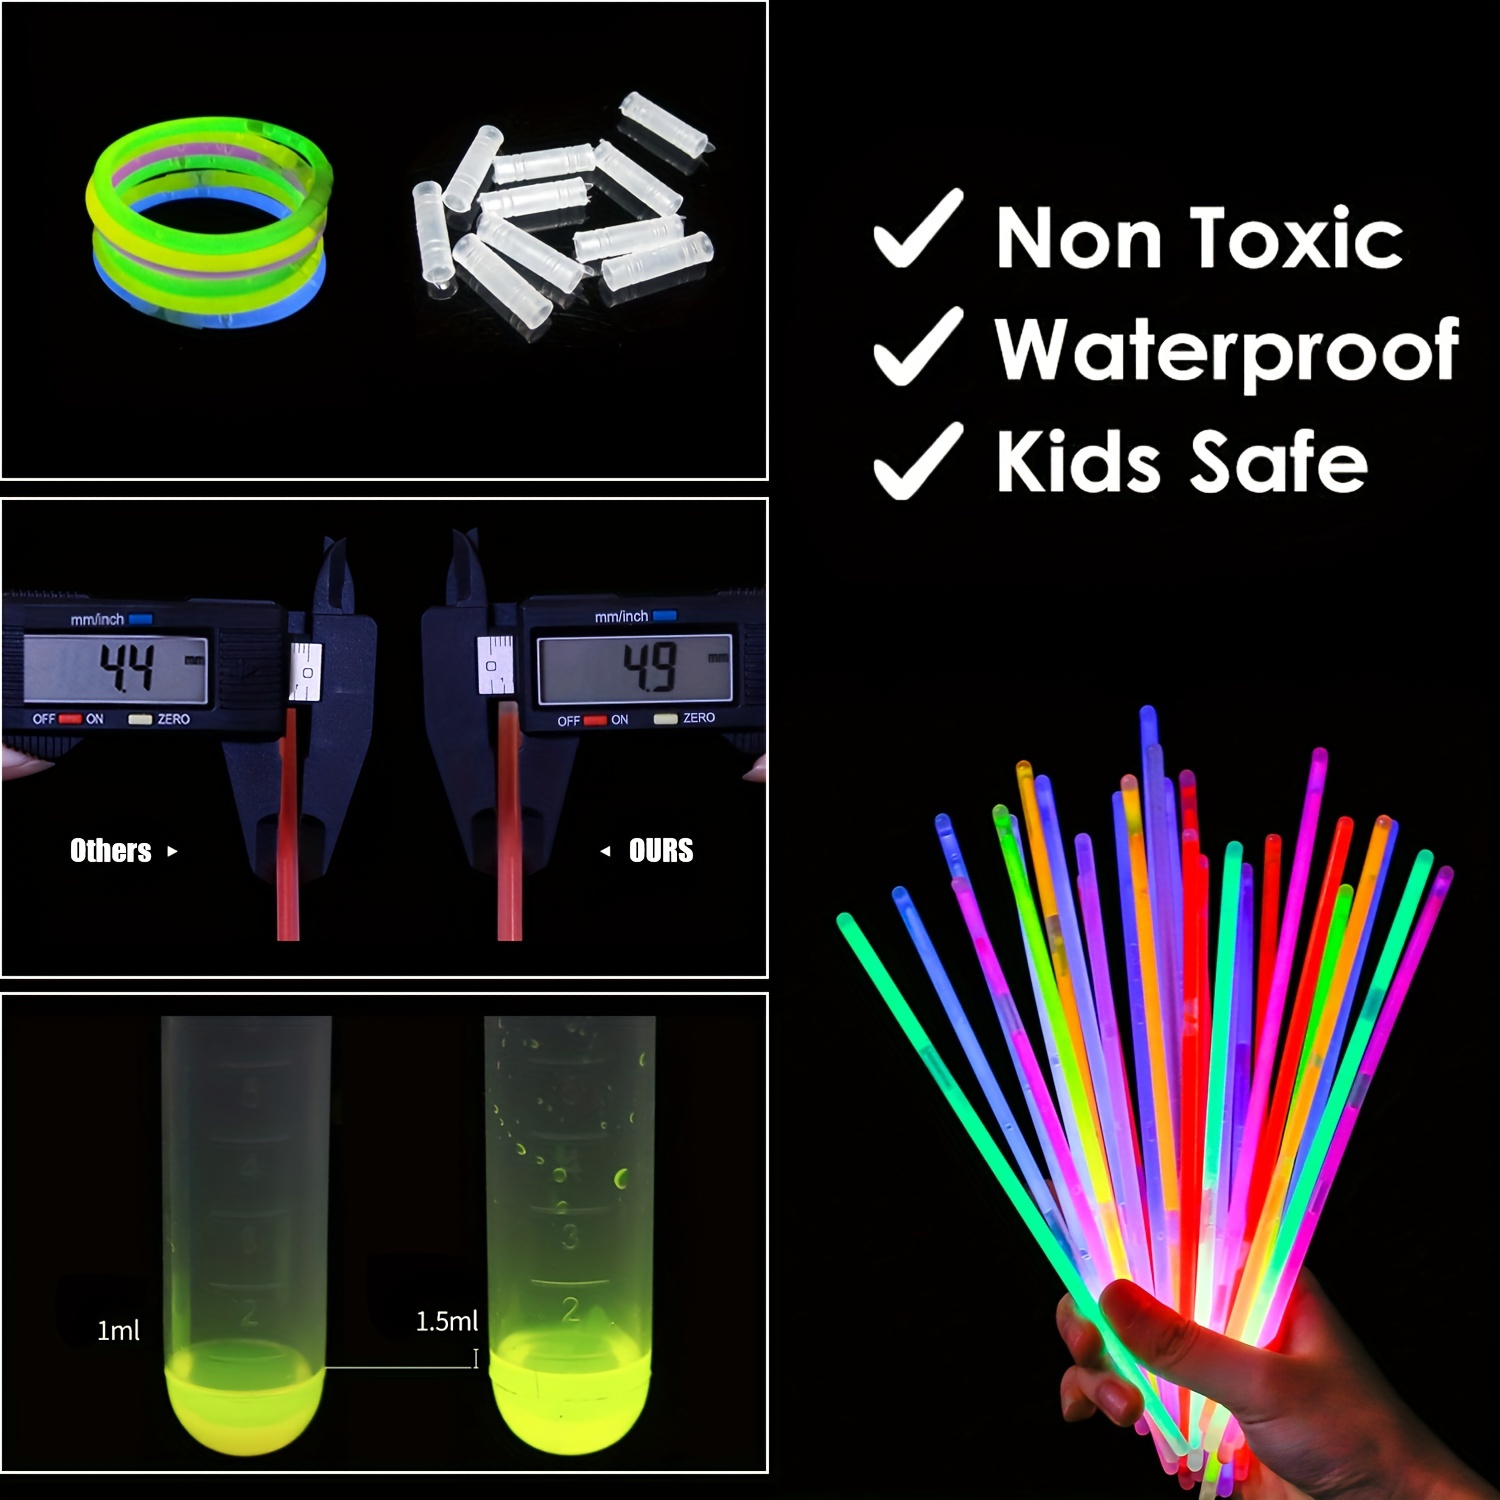 Partysticks Glow Sticks Party Supplies 100/200pcs - 8 Inch Glow In